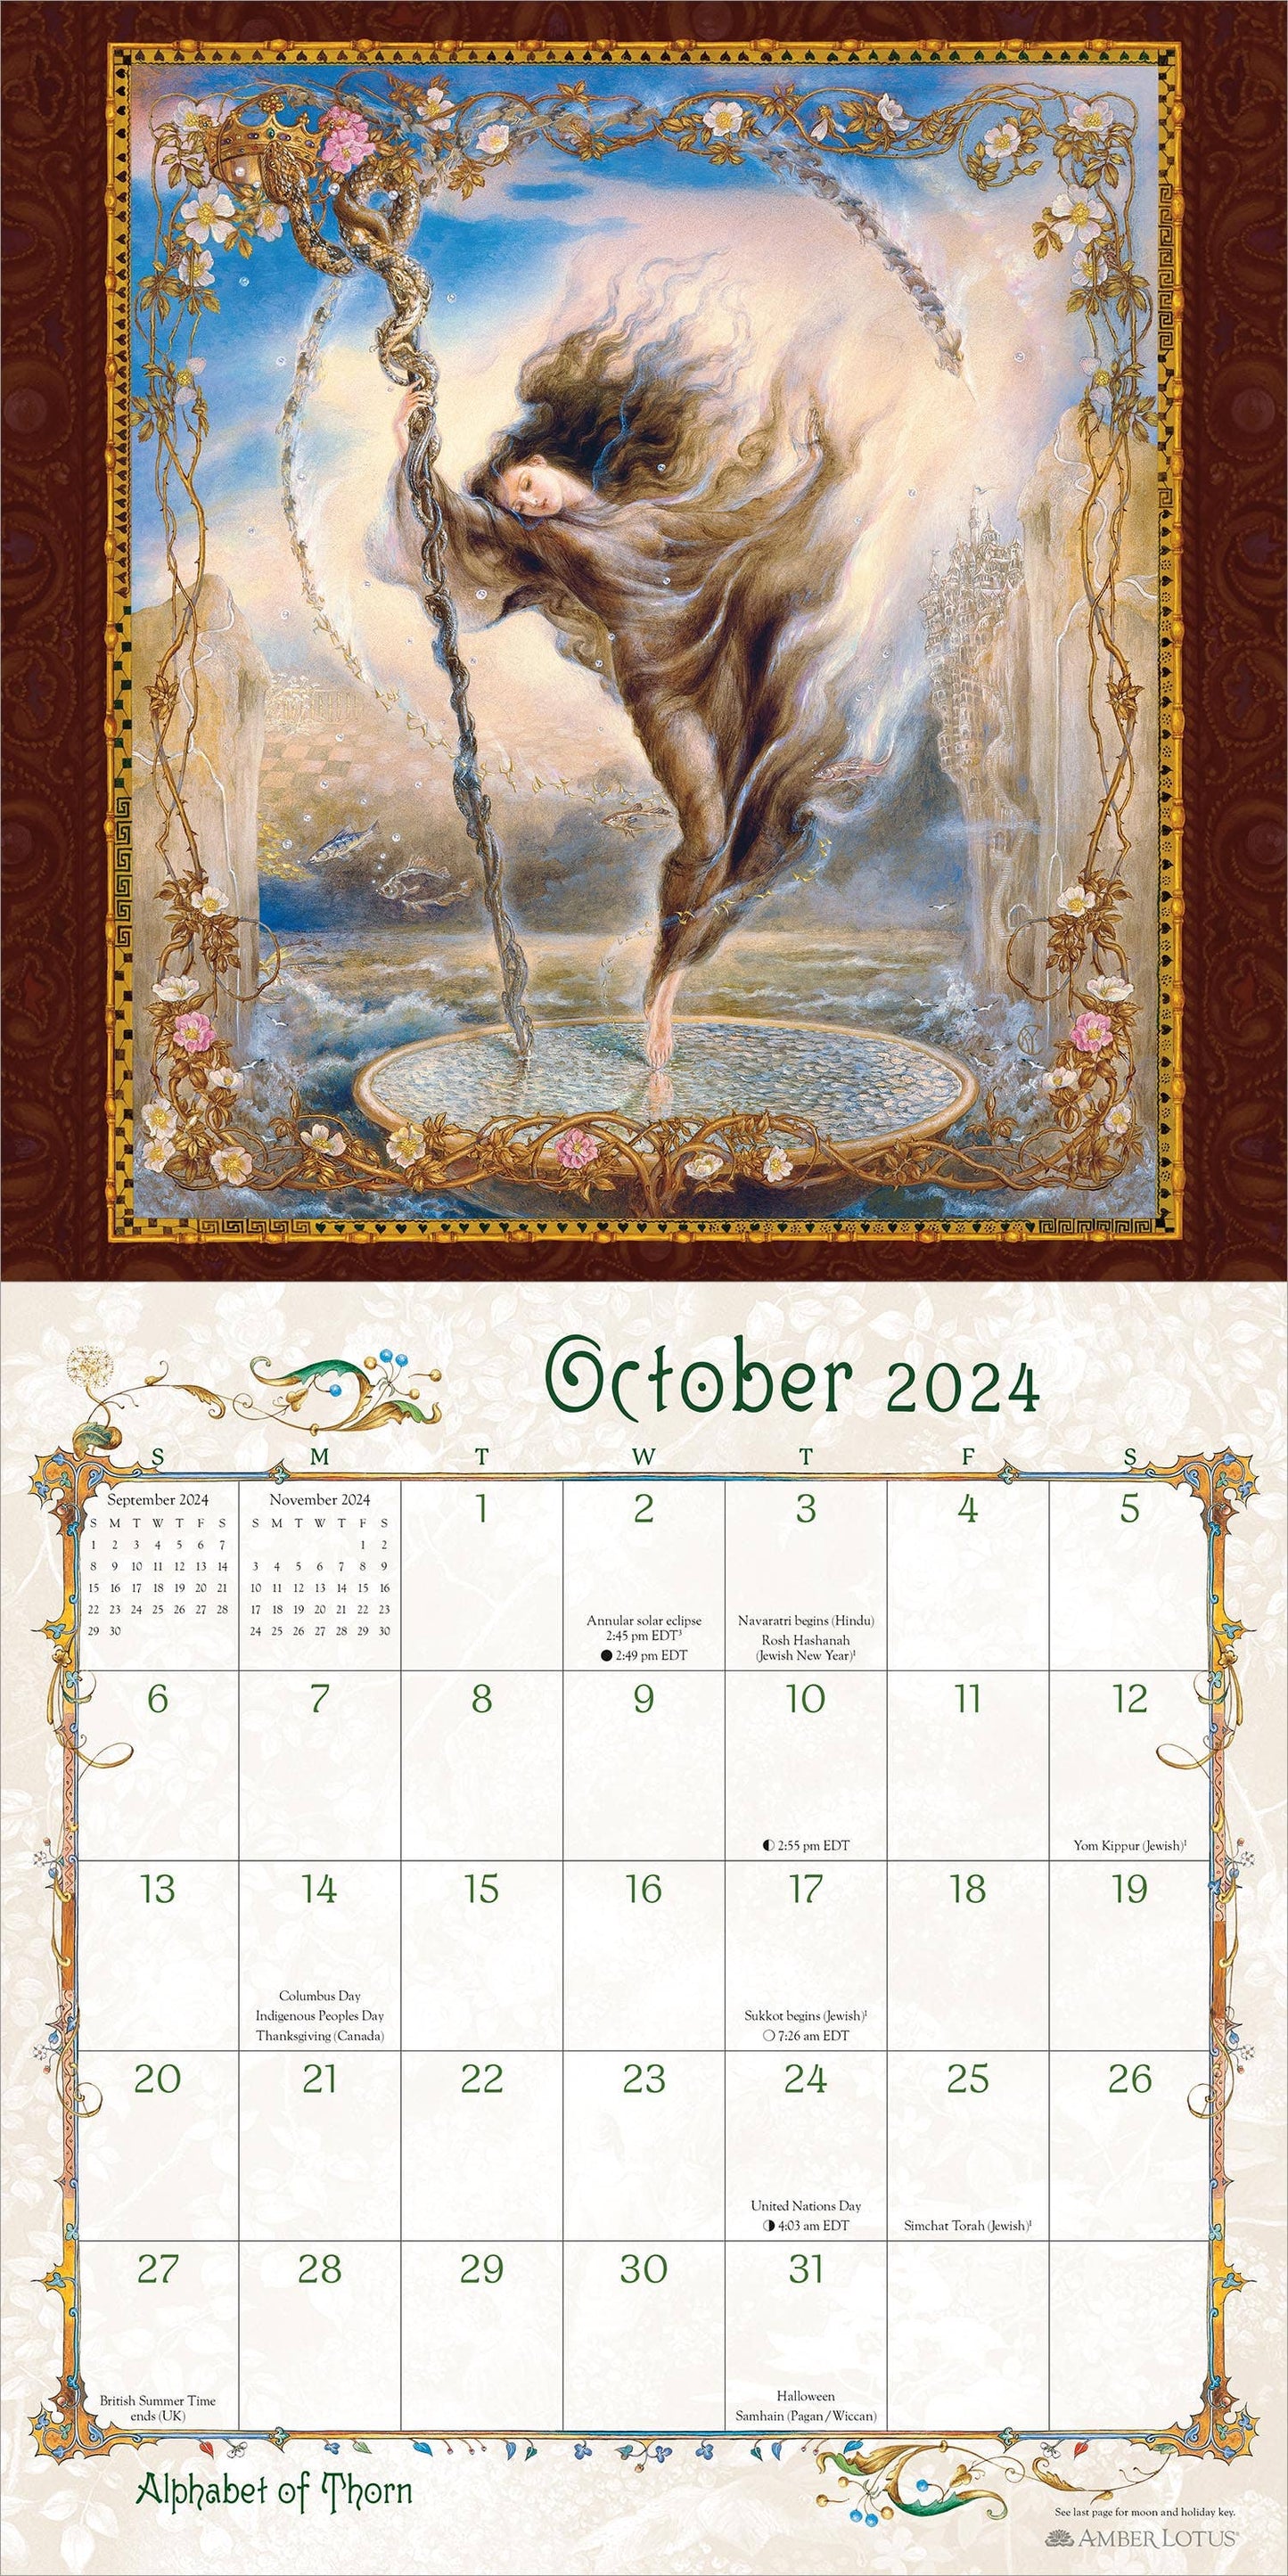 Women of Myth & Magic 2024 Wall Calendar by Kinuko Craft